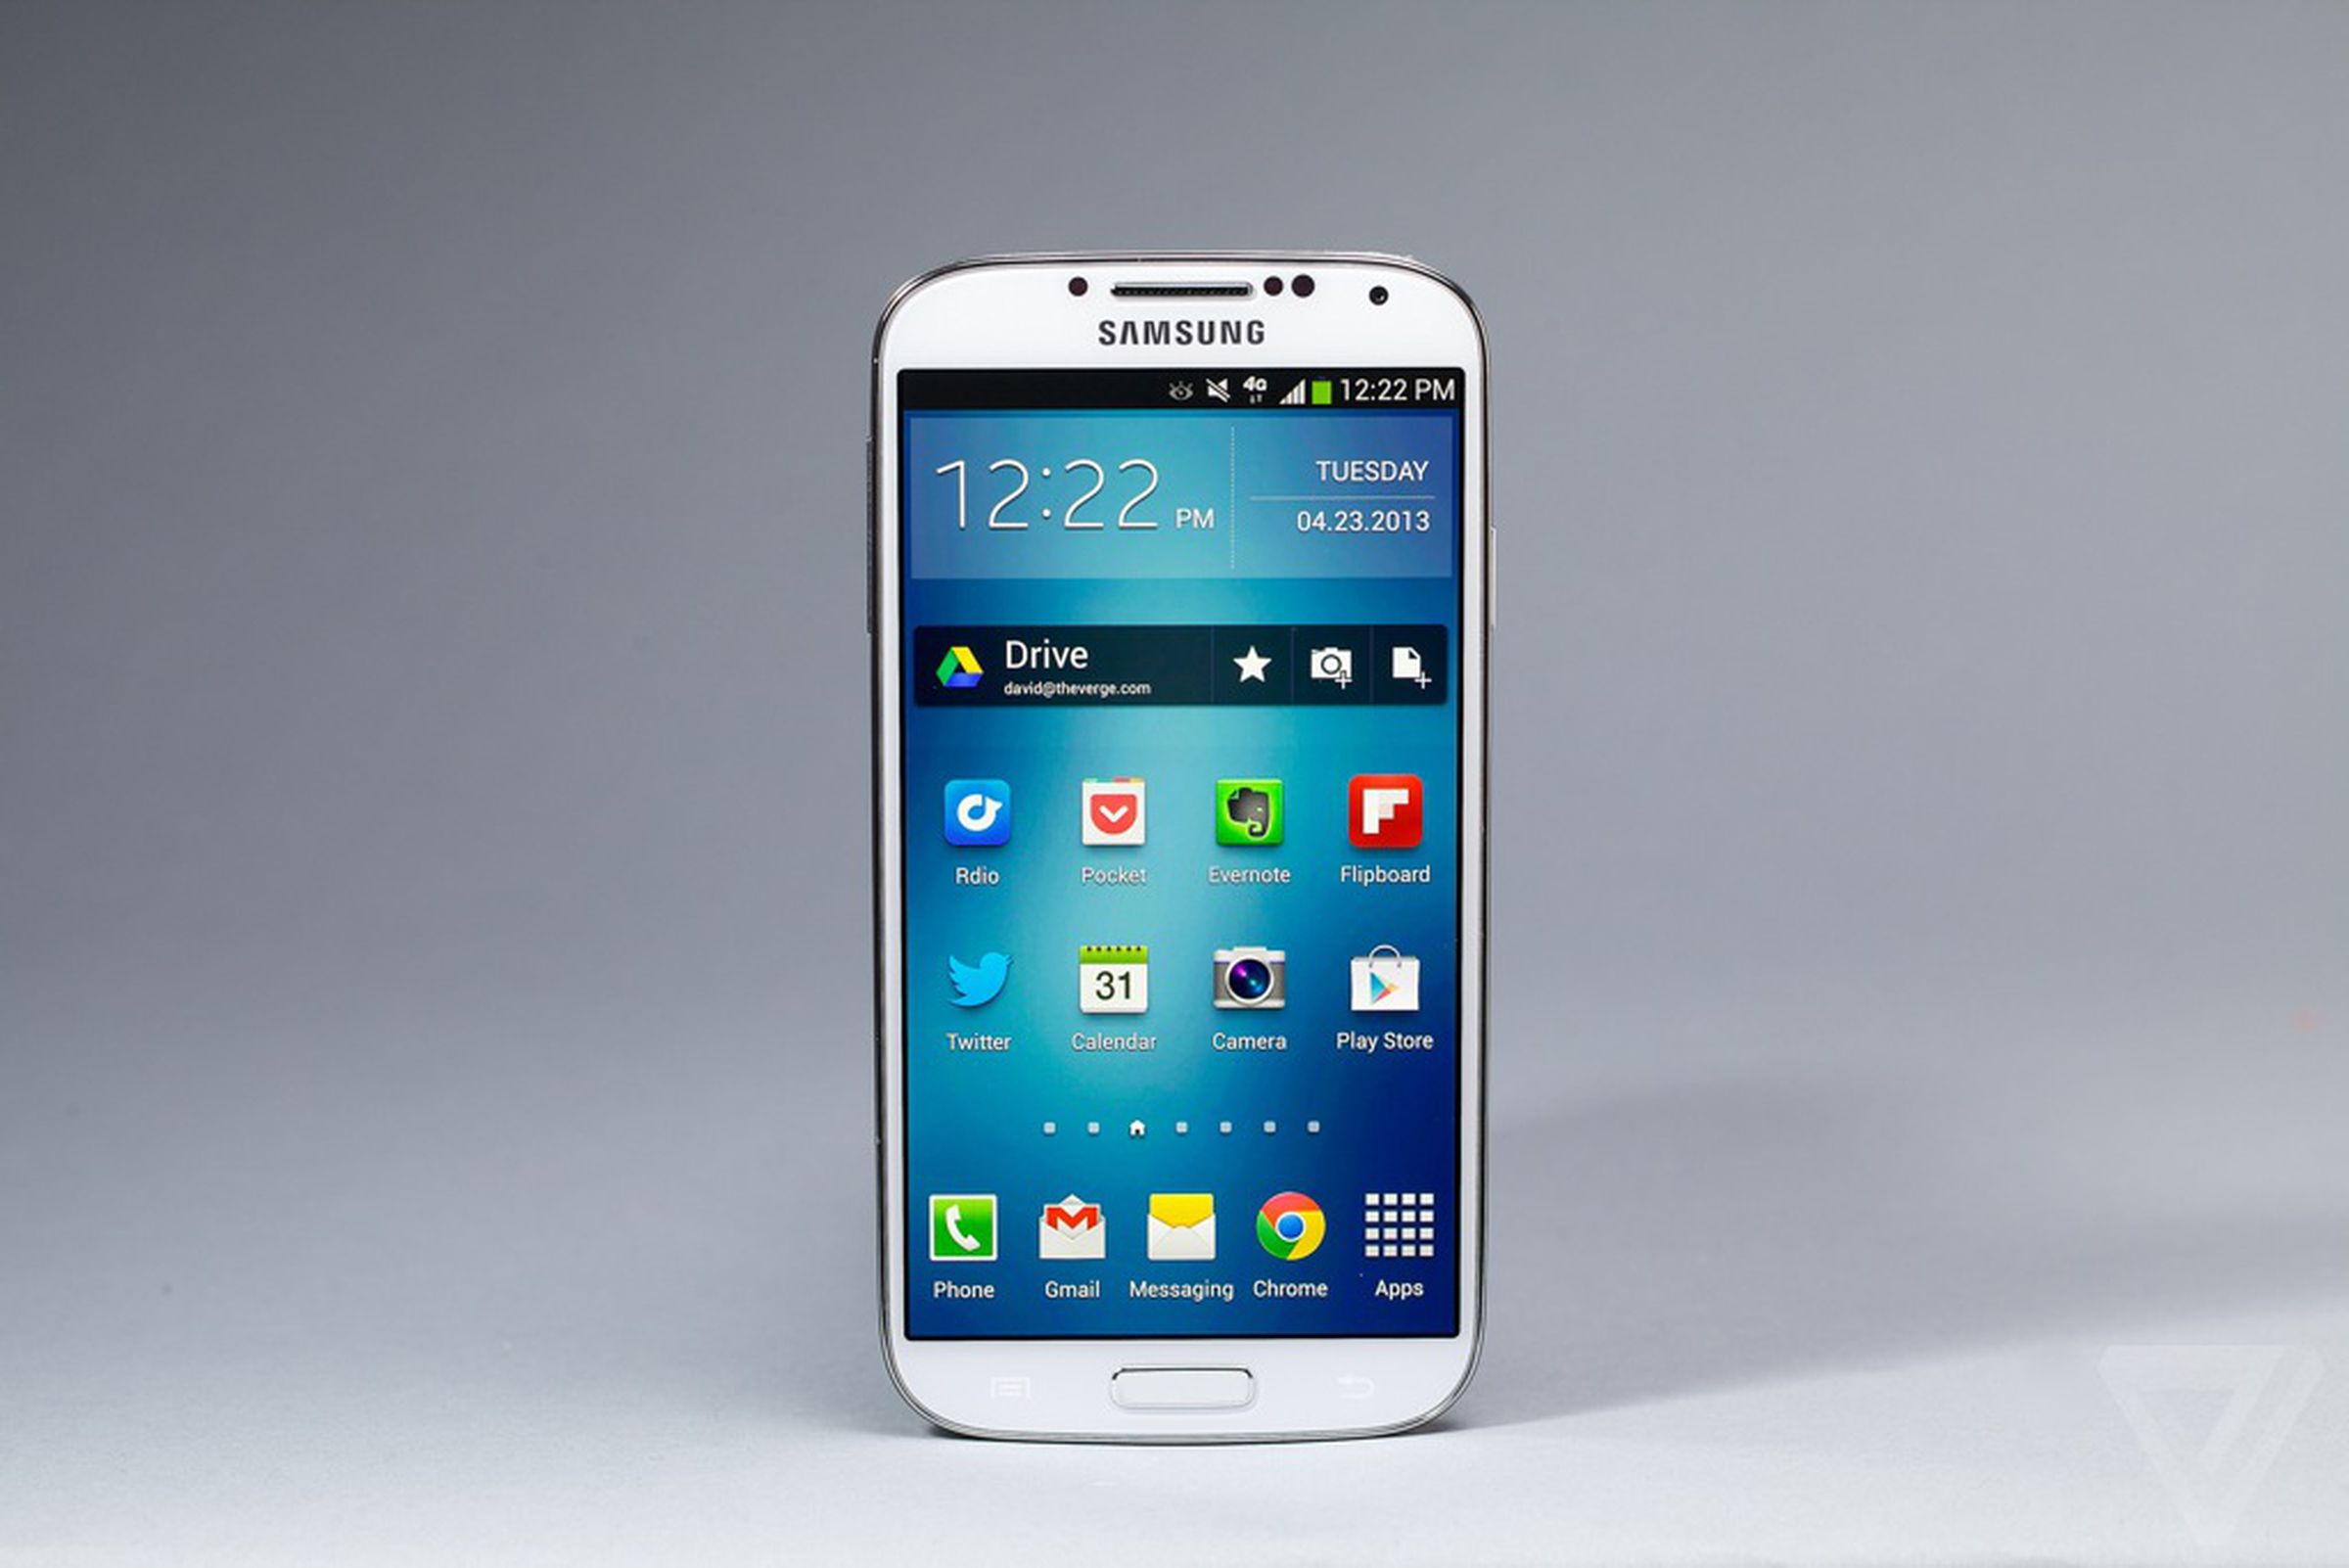 Samsung Galaxy S4 hands-on photos